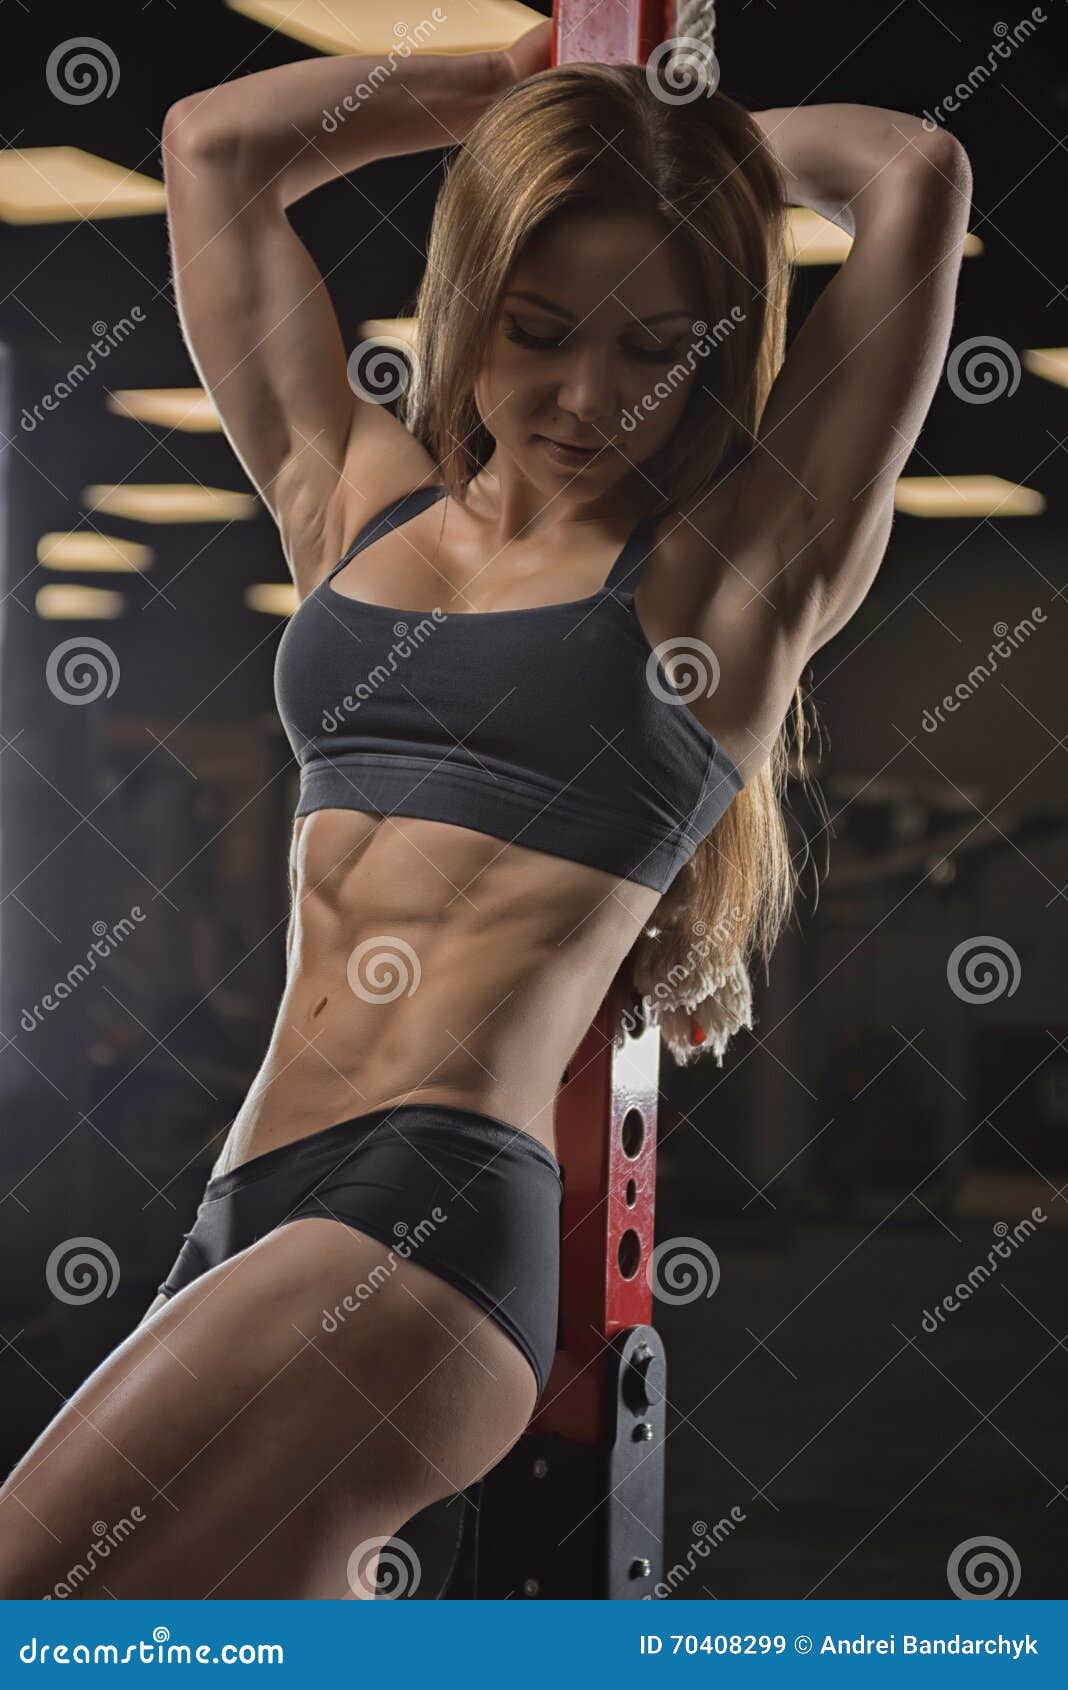 Women Fitness Poses